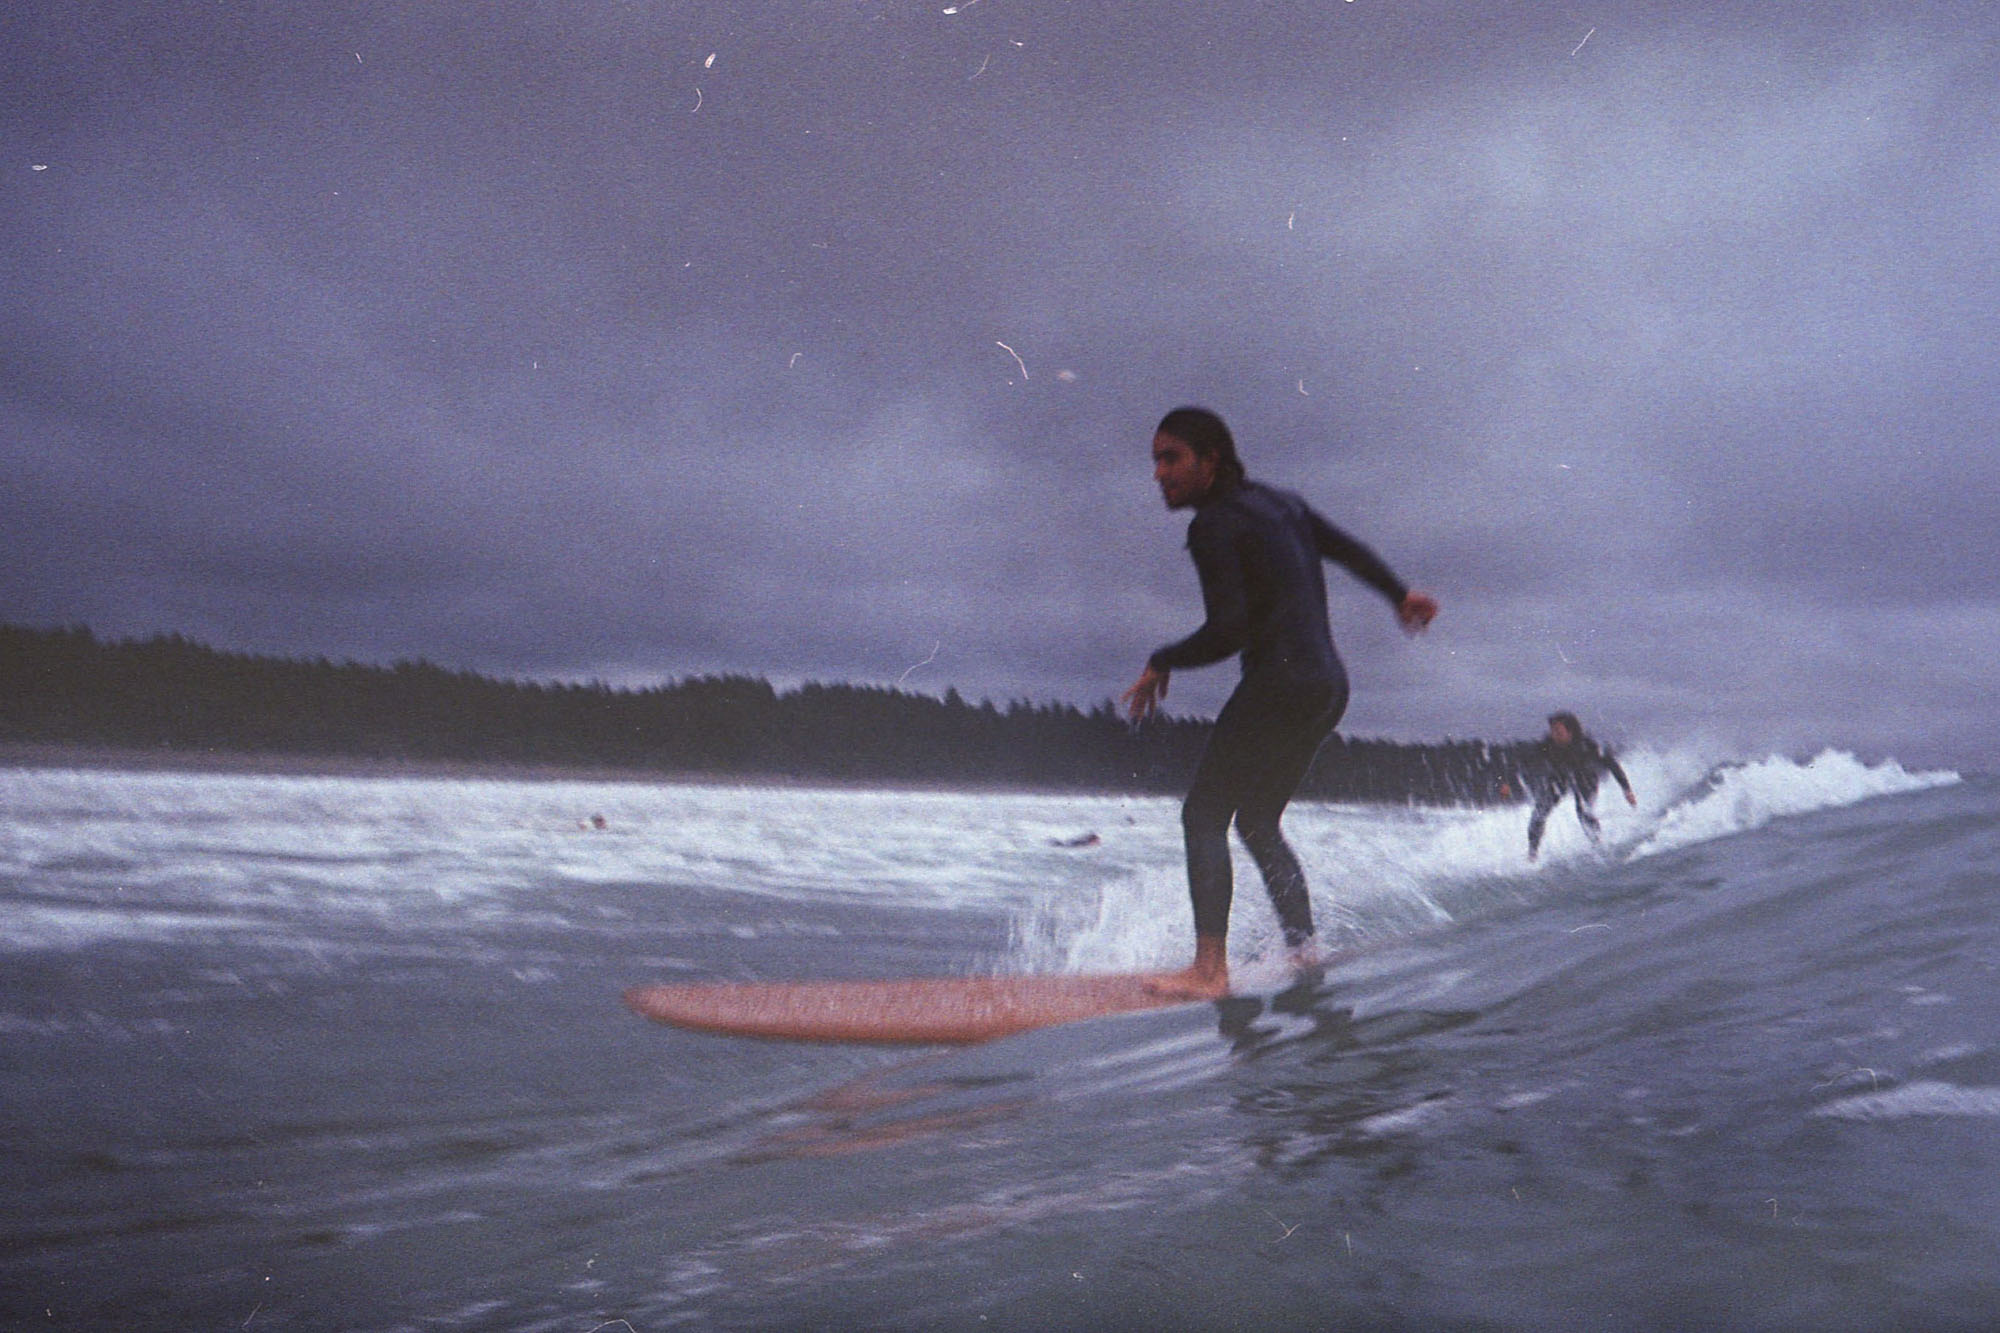 surf photo nikonos